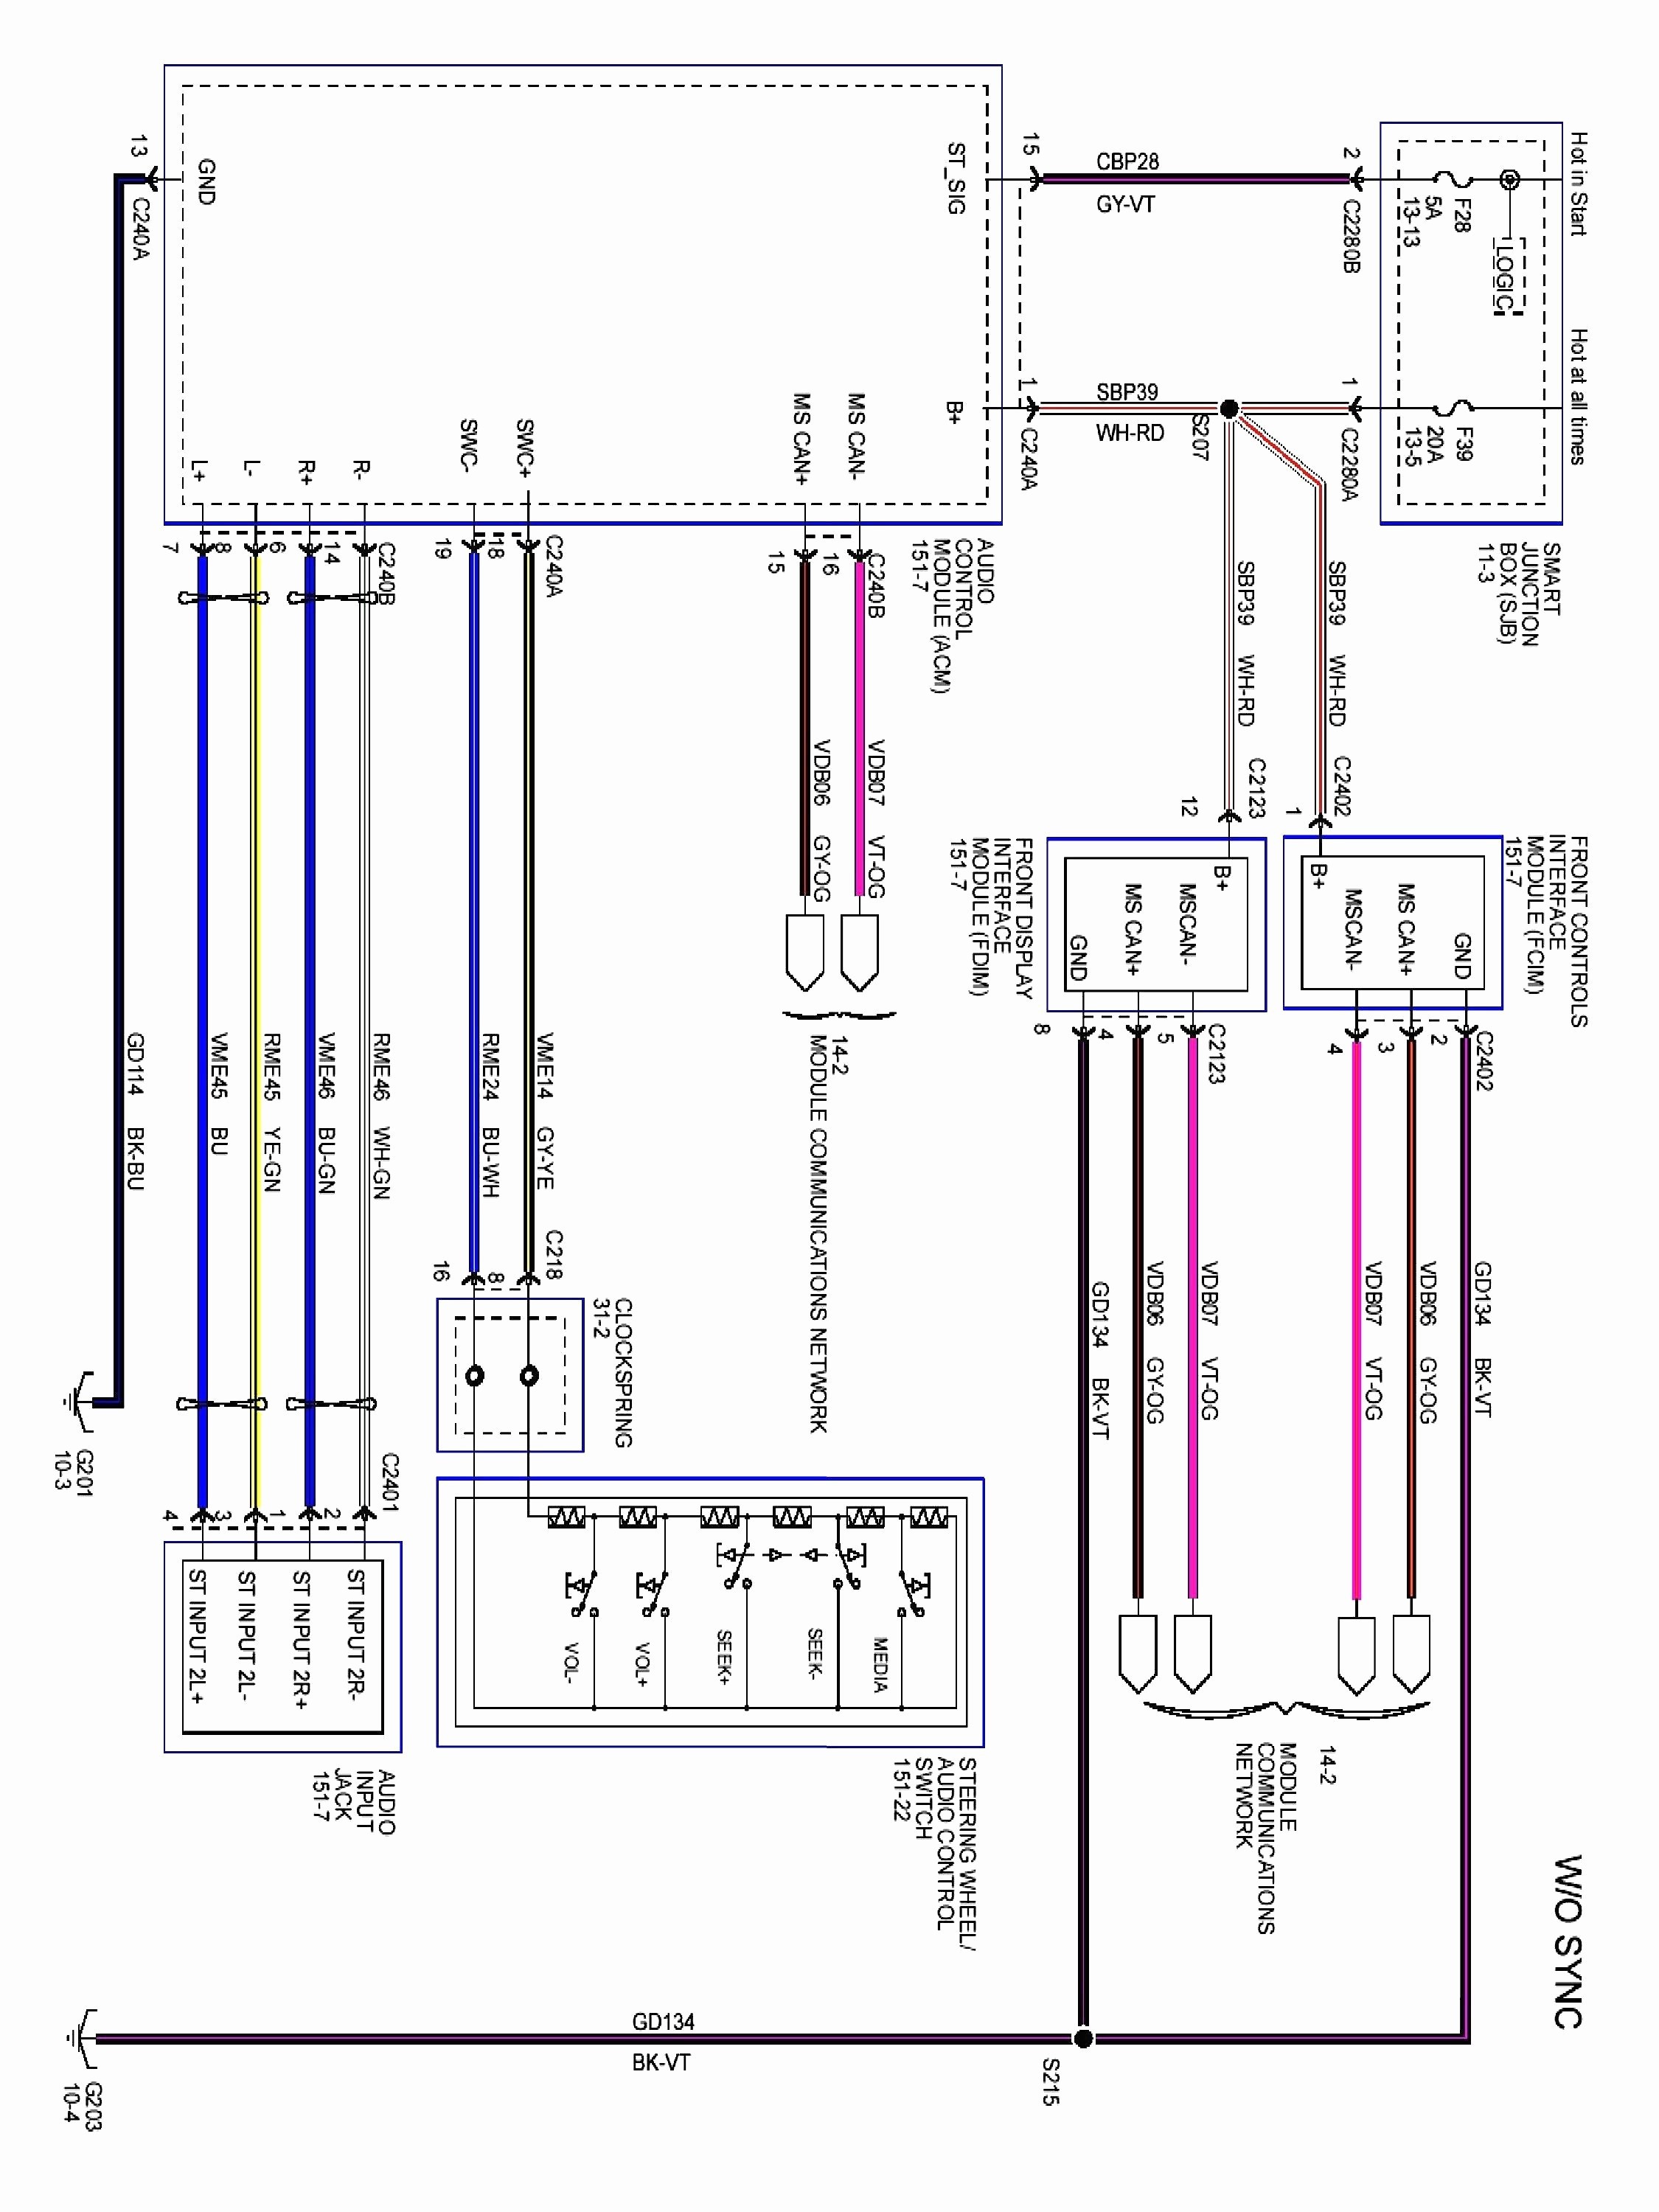 St50 Wiring Diagram For The Uk Or British Model Honda St 50